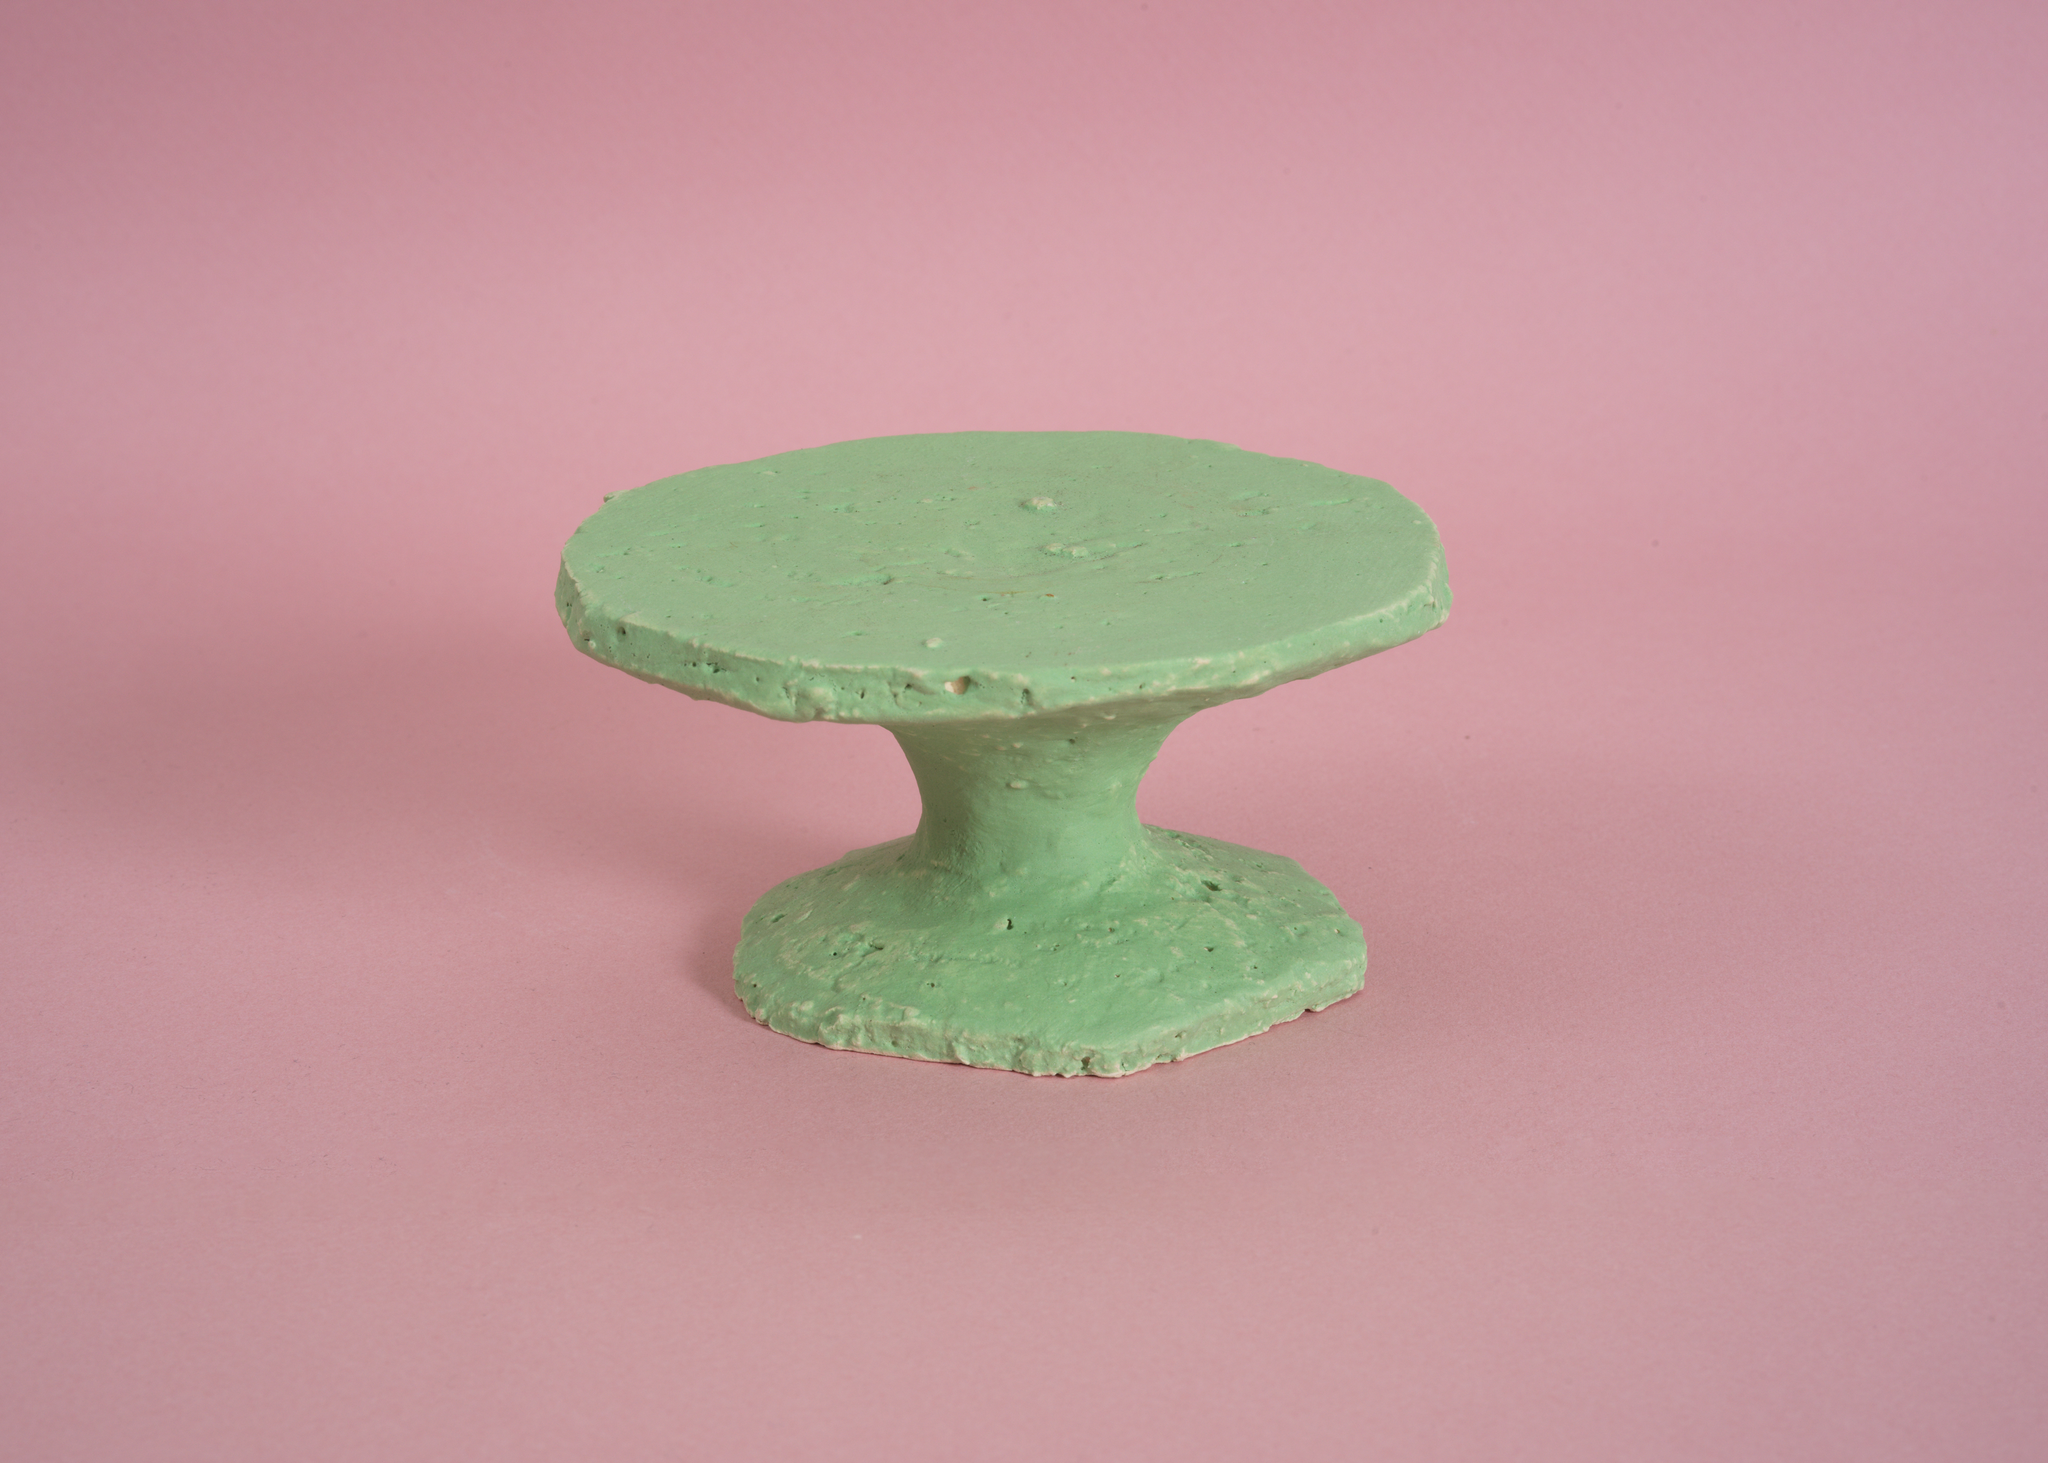 Christine Roland, ‘Small stoneware platform with foot’, 2019